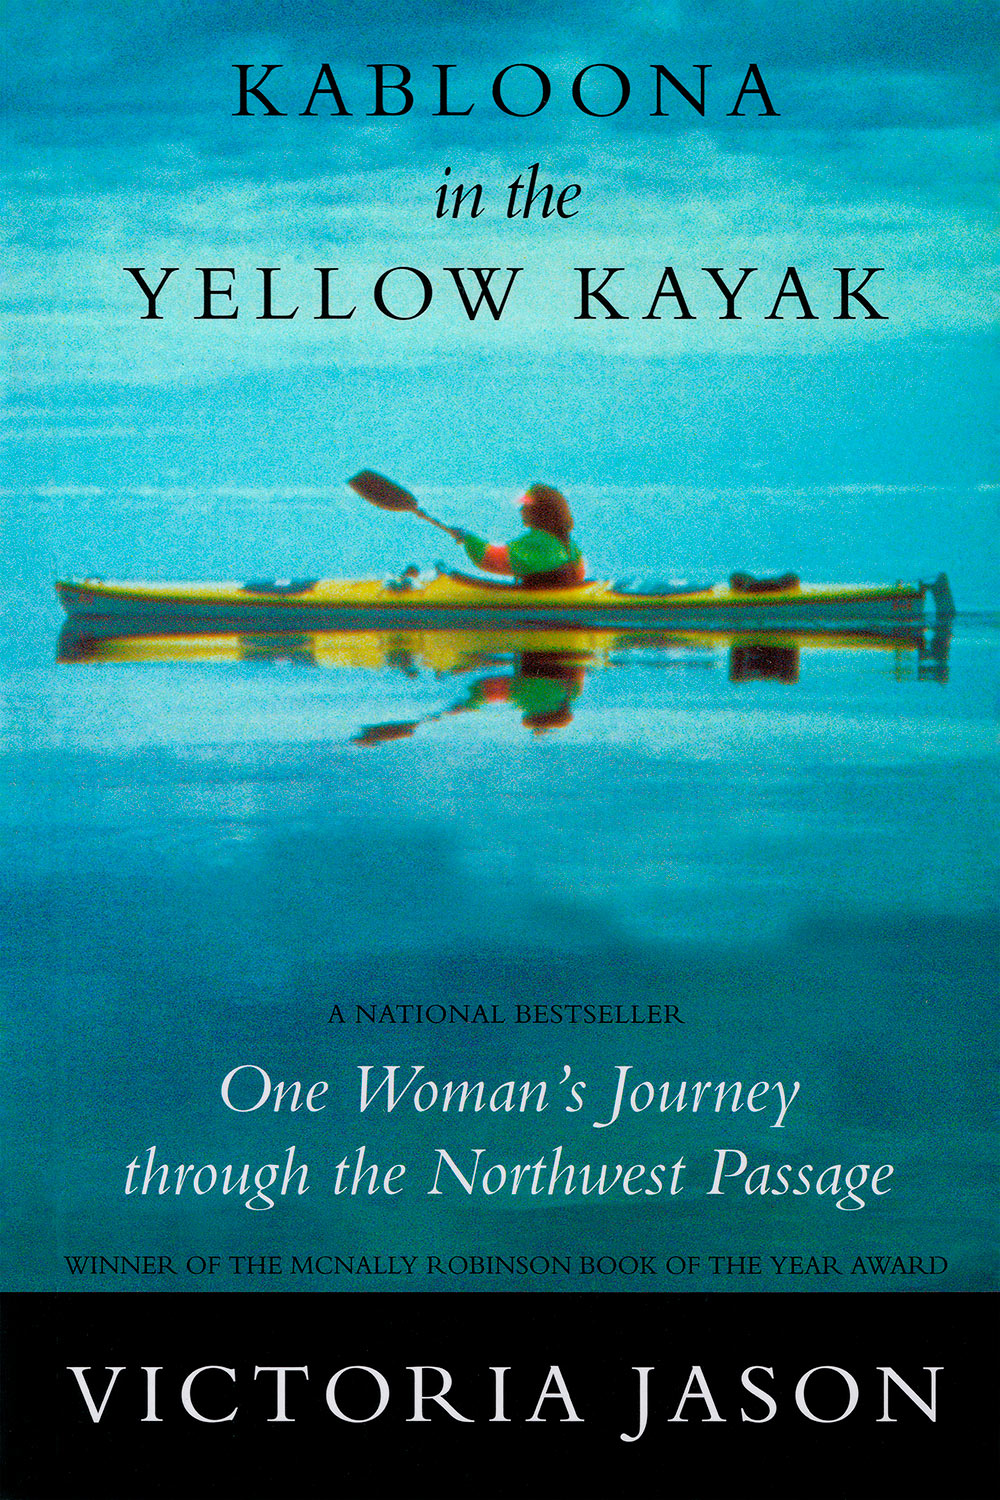 Kabloona and the Yellow Kayak